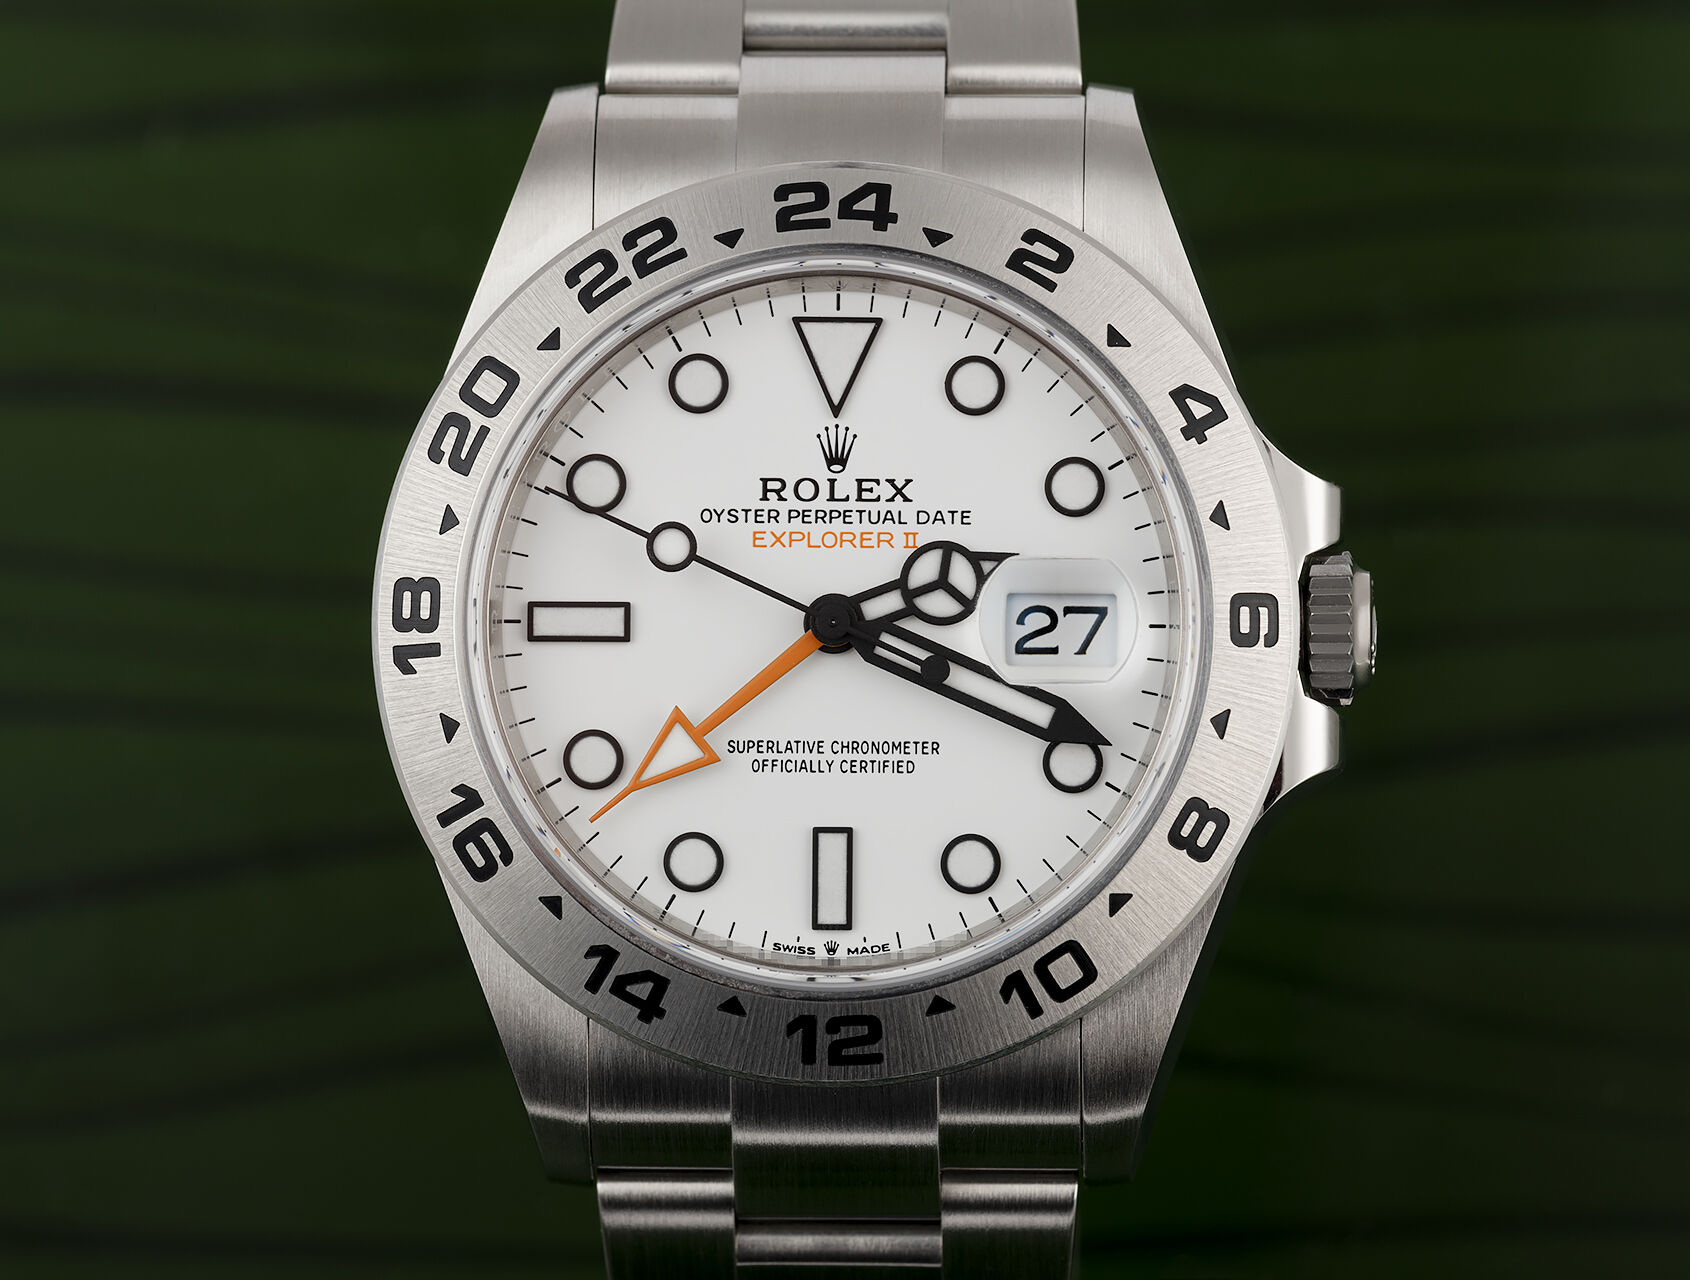 ref 226570 | 226570 - Brand New | Rolex Explorer II